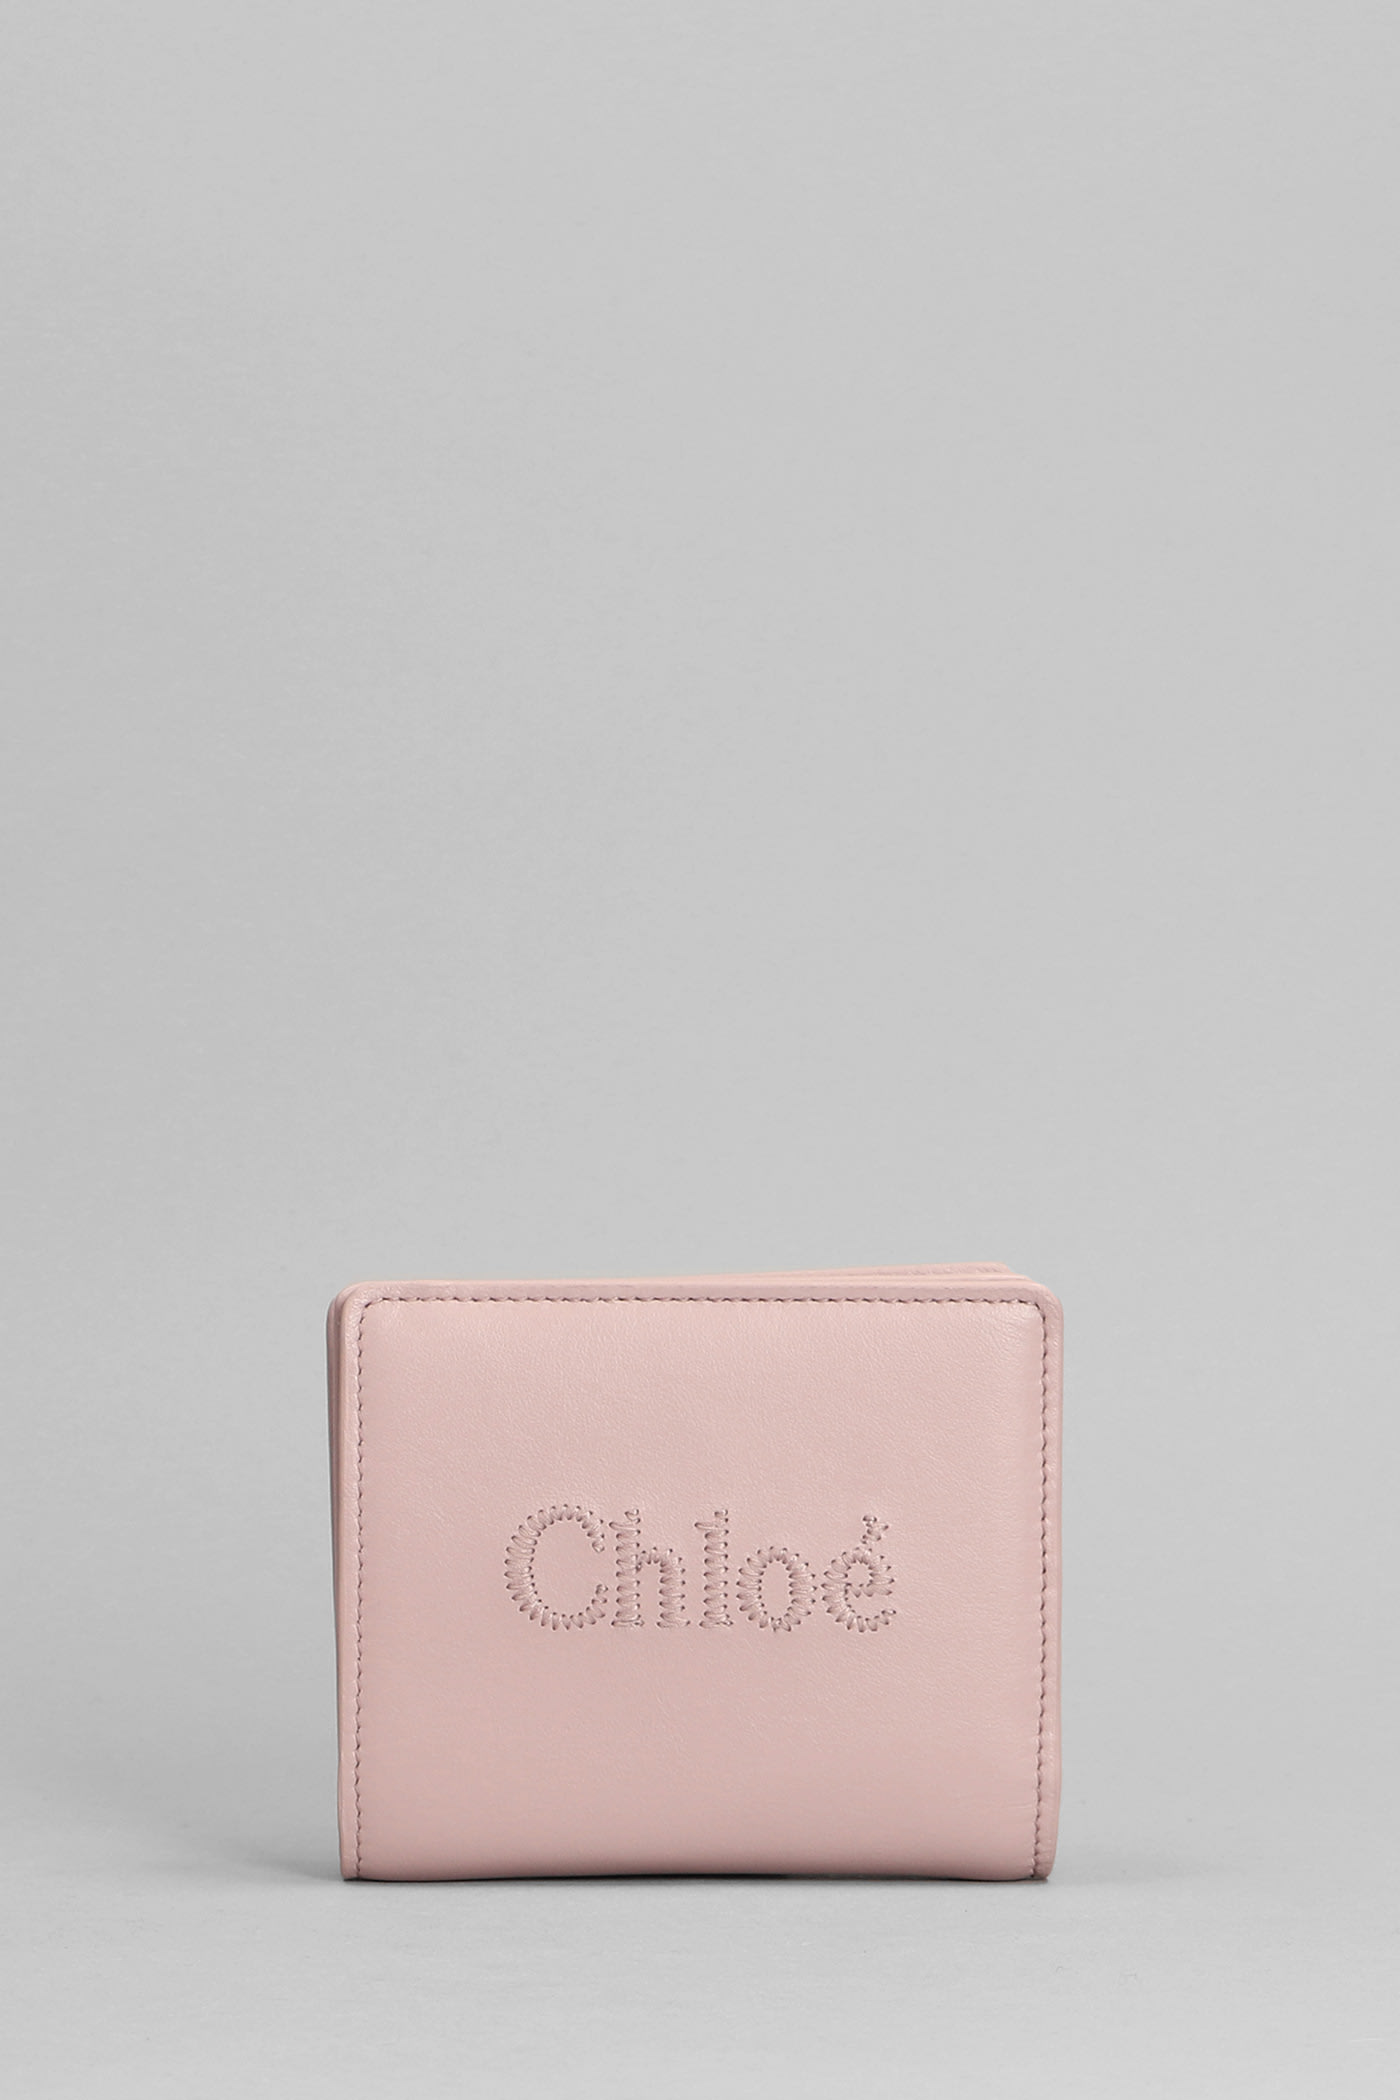 Chloé Sense Wallet In Viola Leather